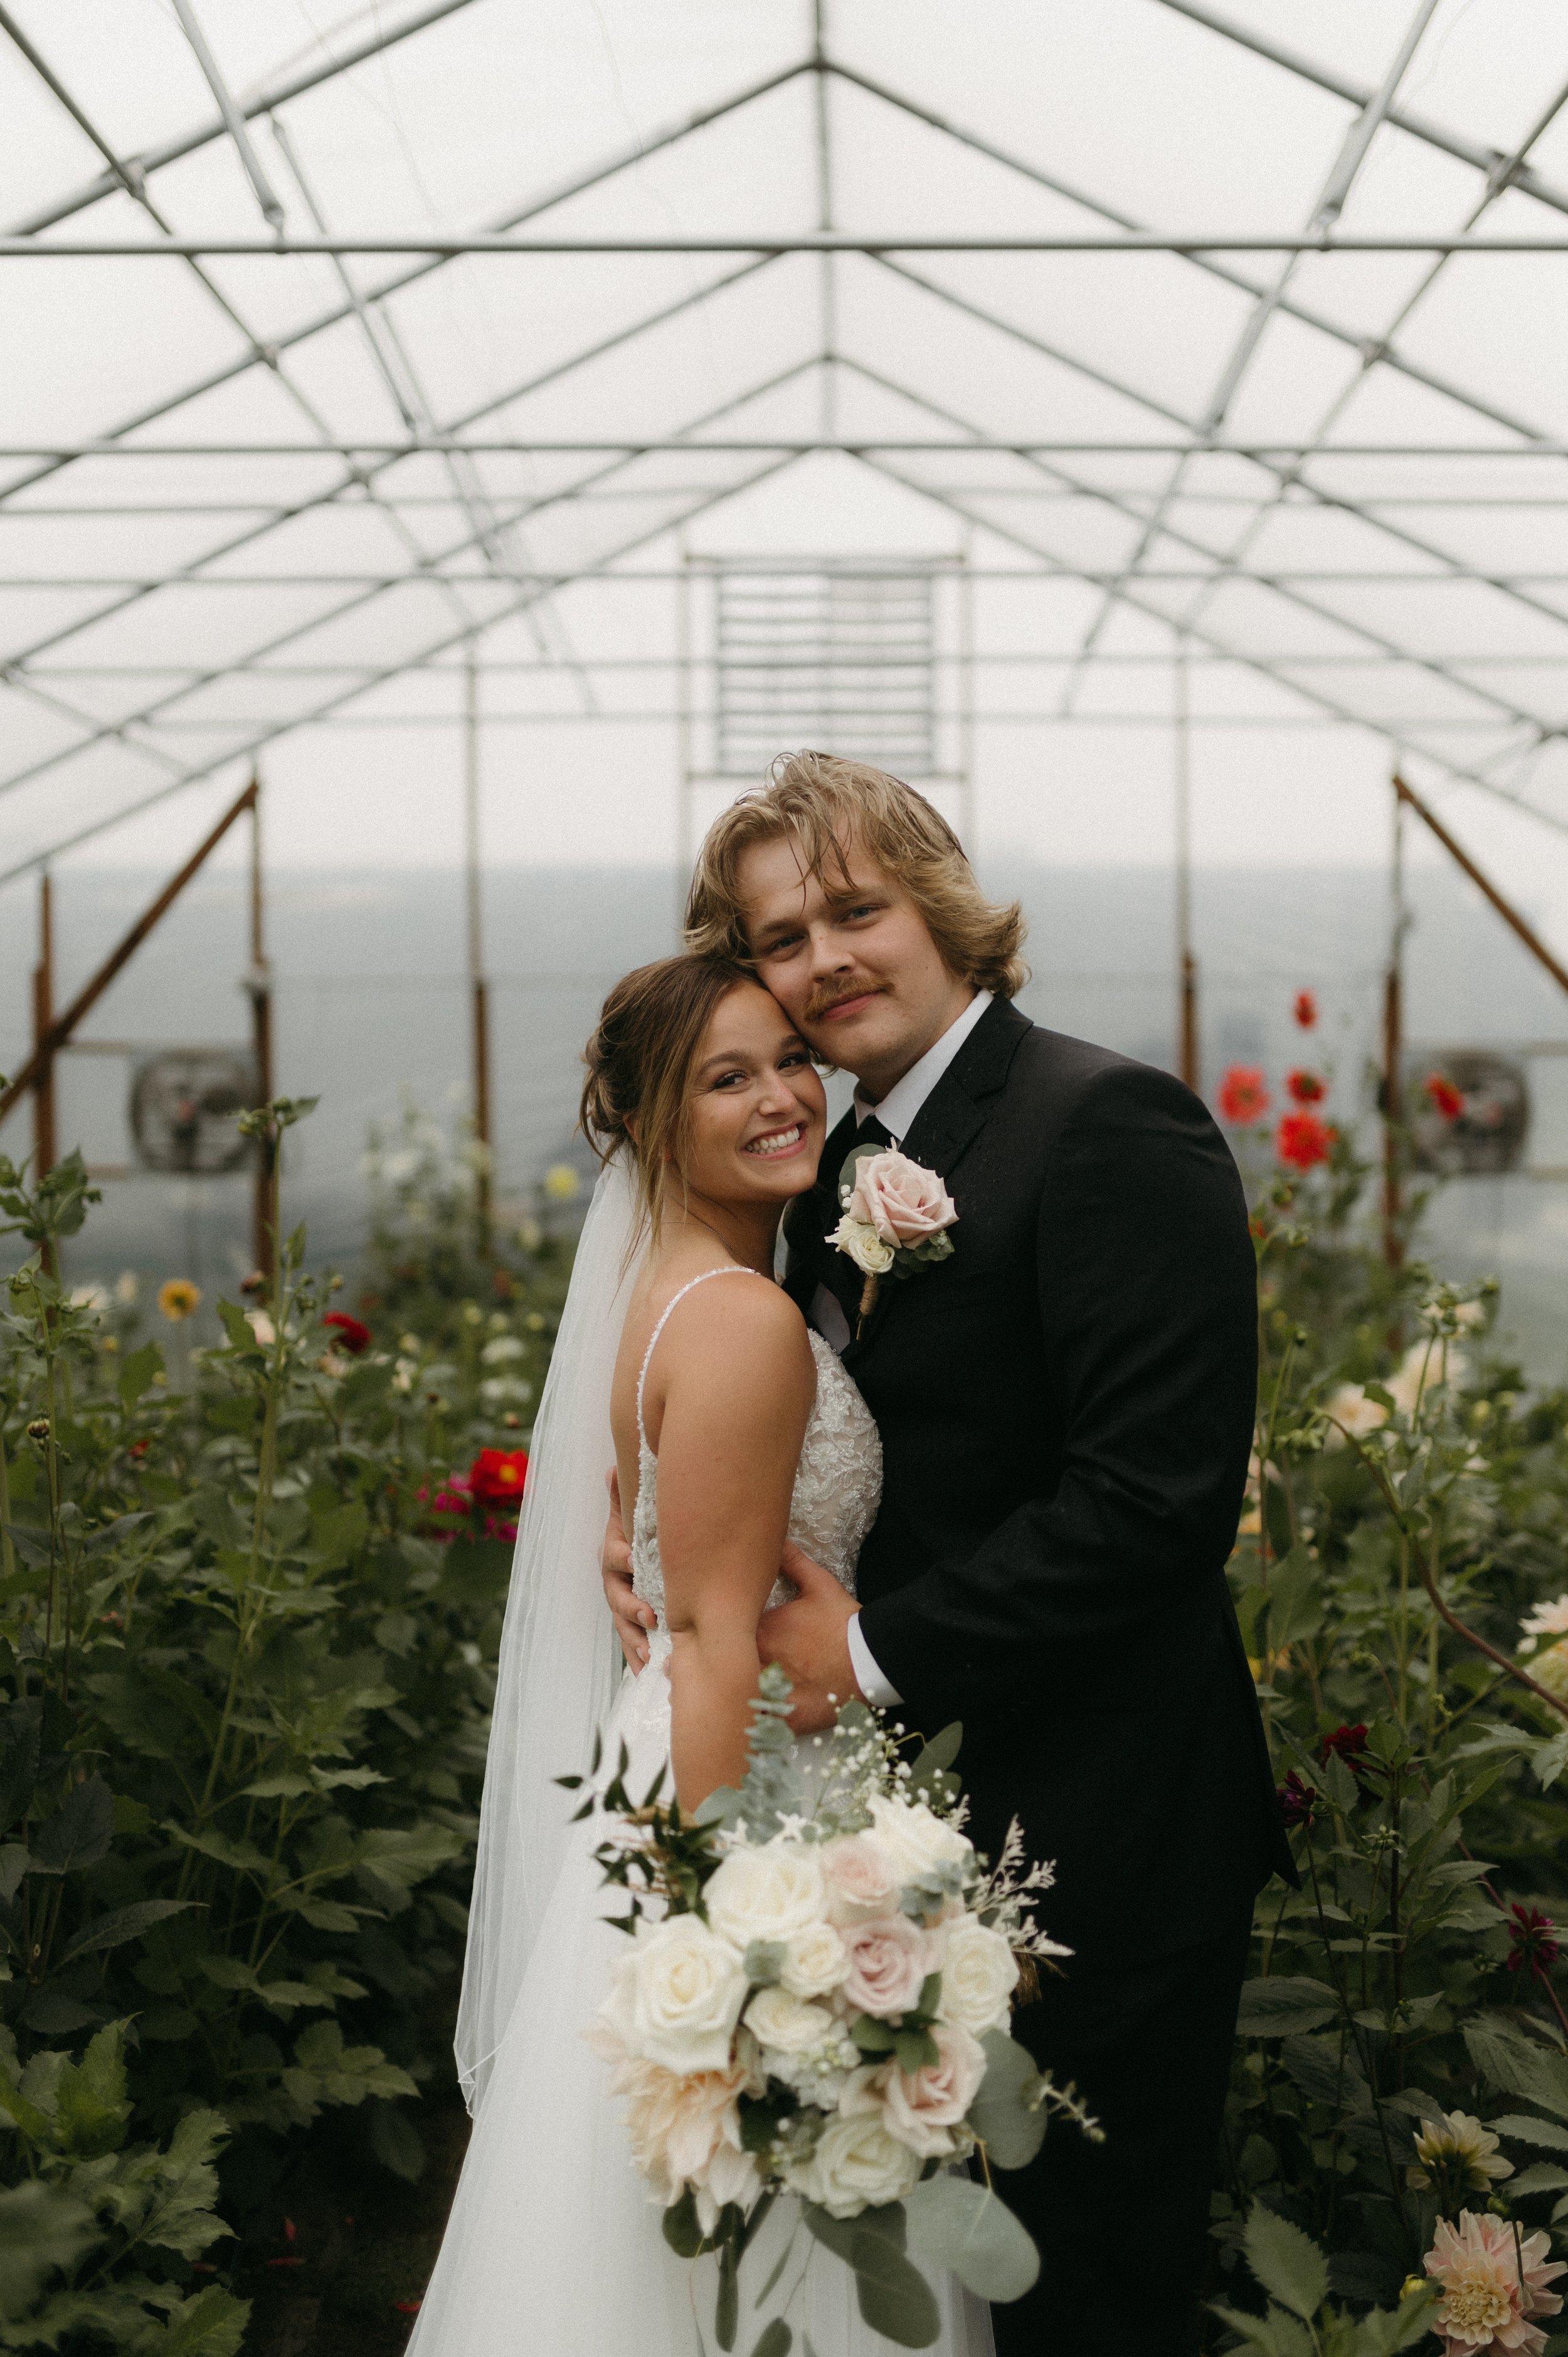 A ROMANTIC RAINY WEDDING DAY IN PALMER, ALASKA